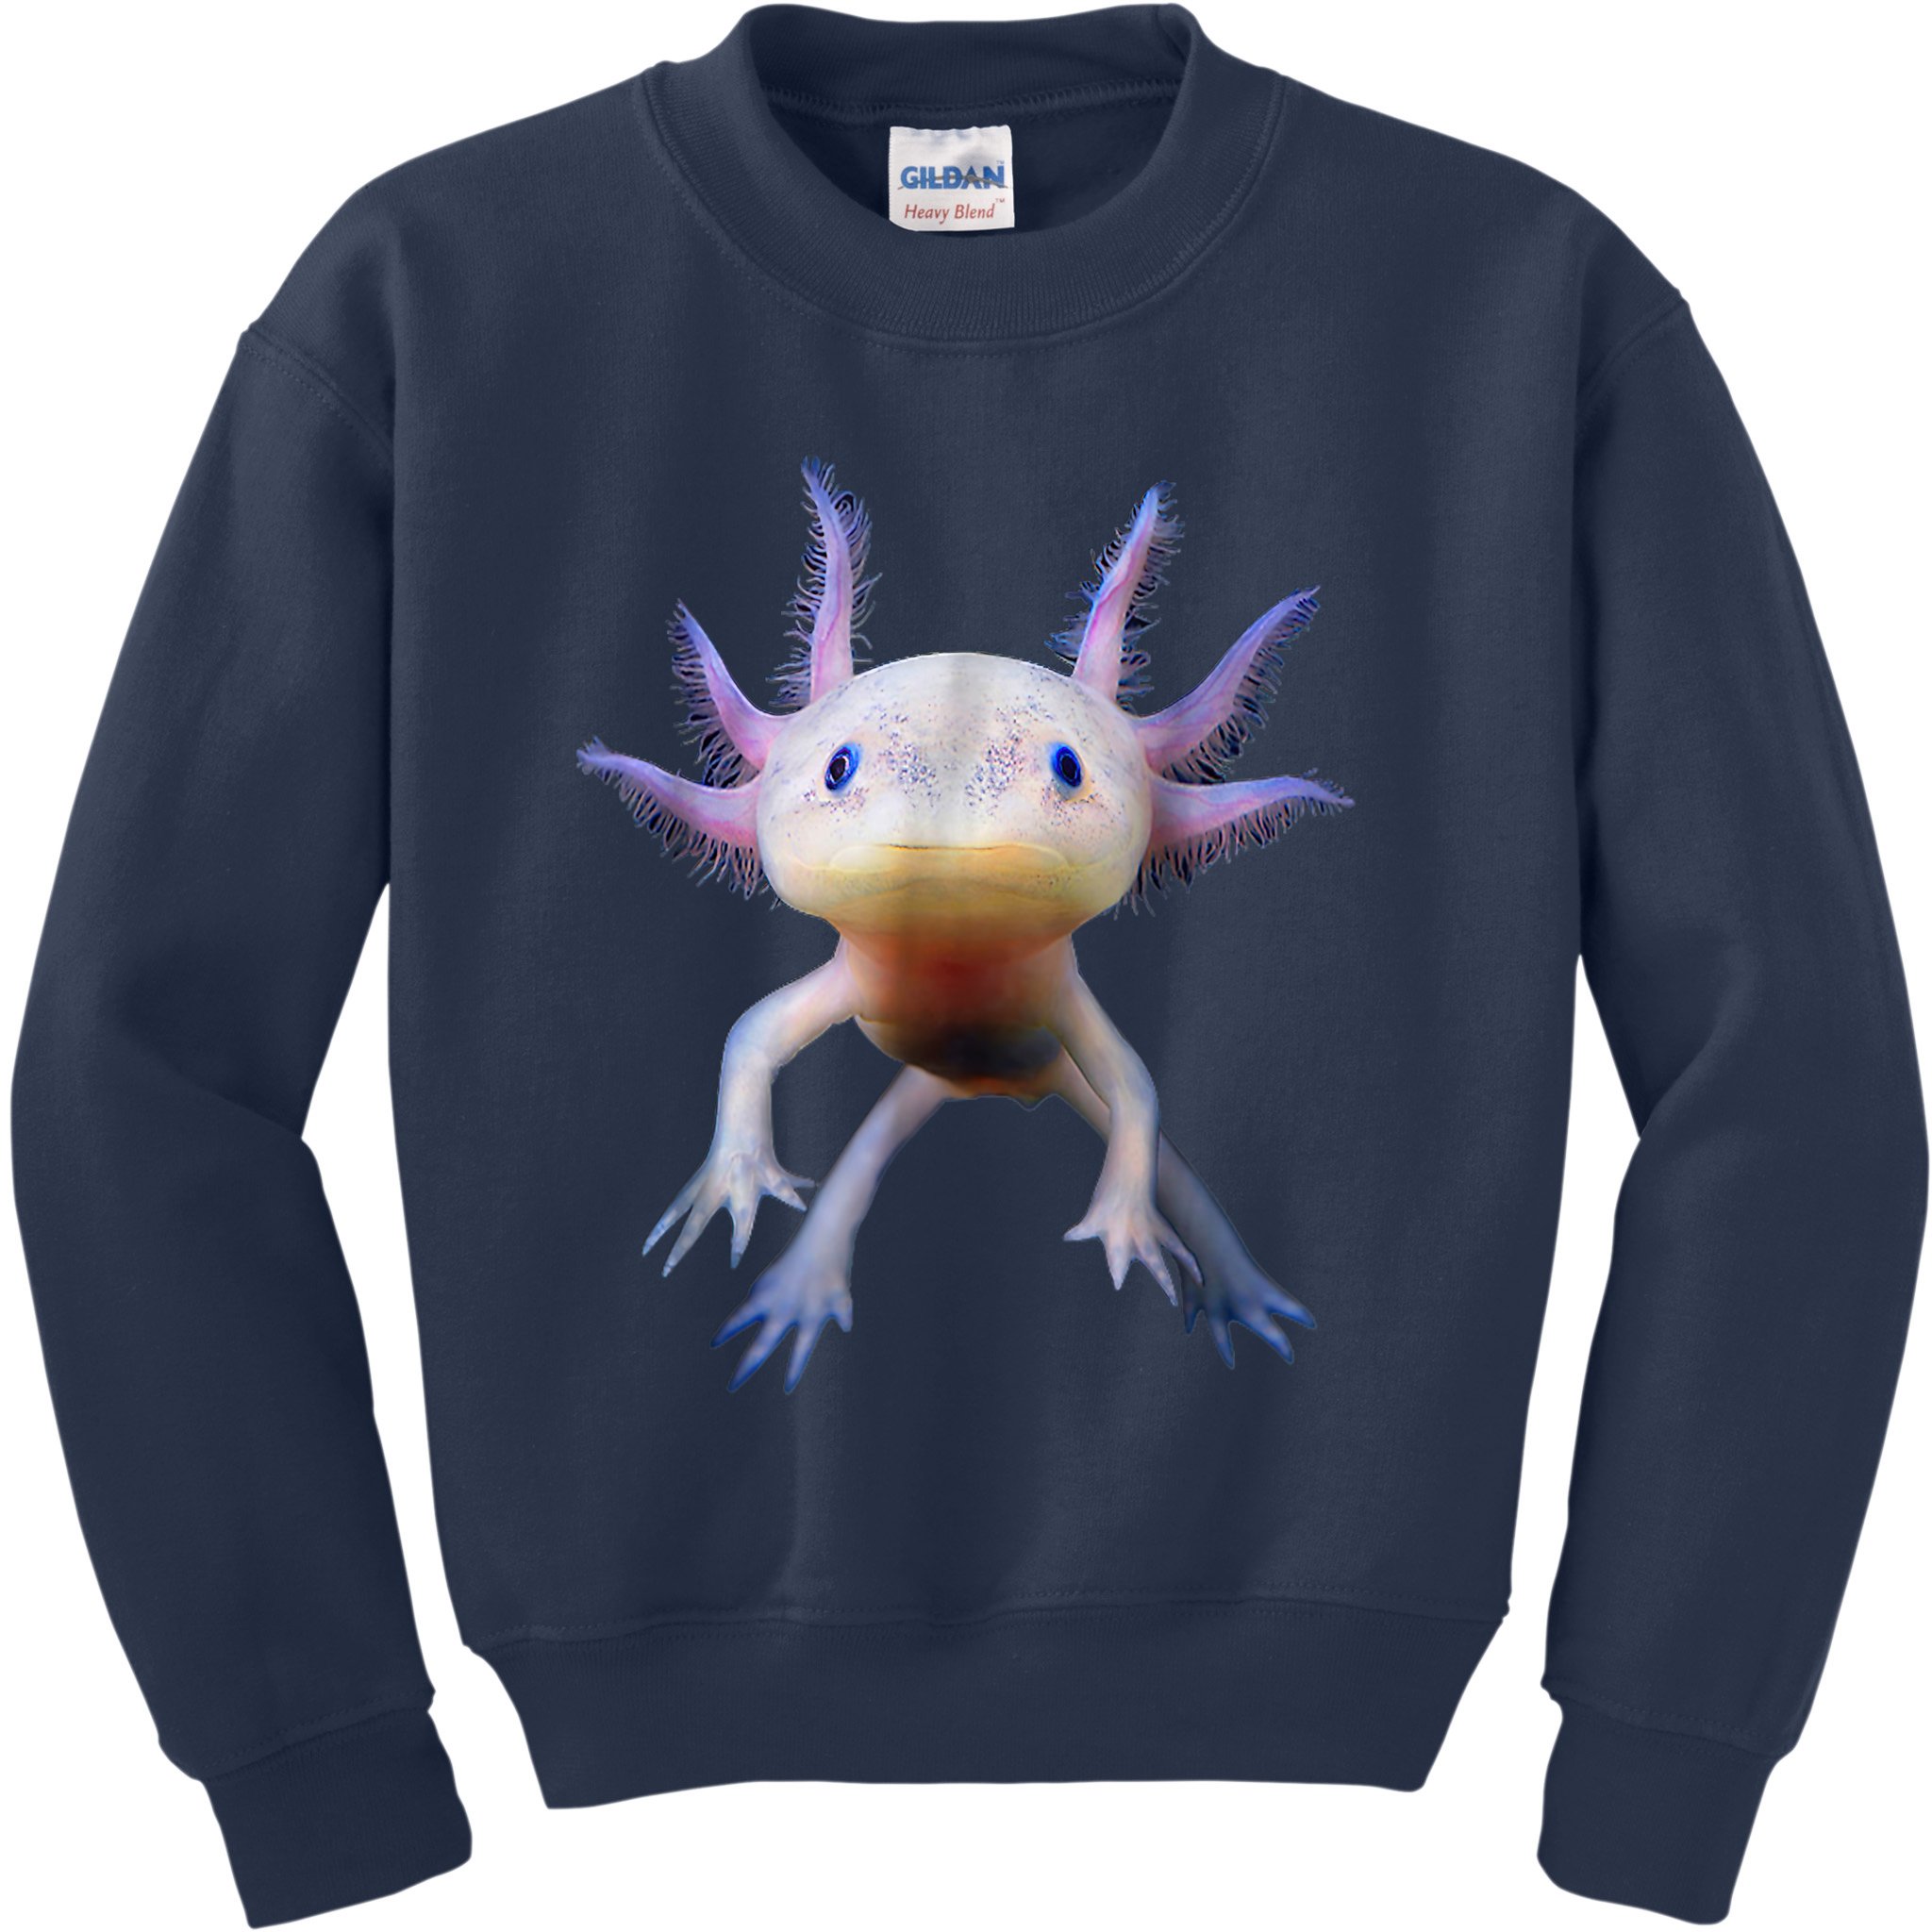 Axolotl Gifts, Pets Animals amphibians Axolotls' Men's Tall T-Shirt